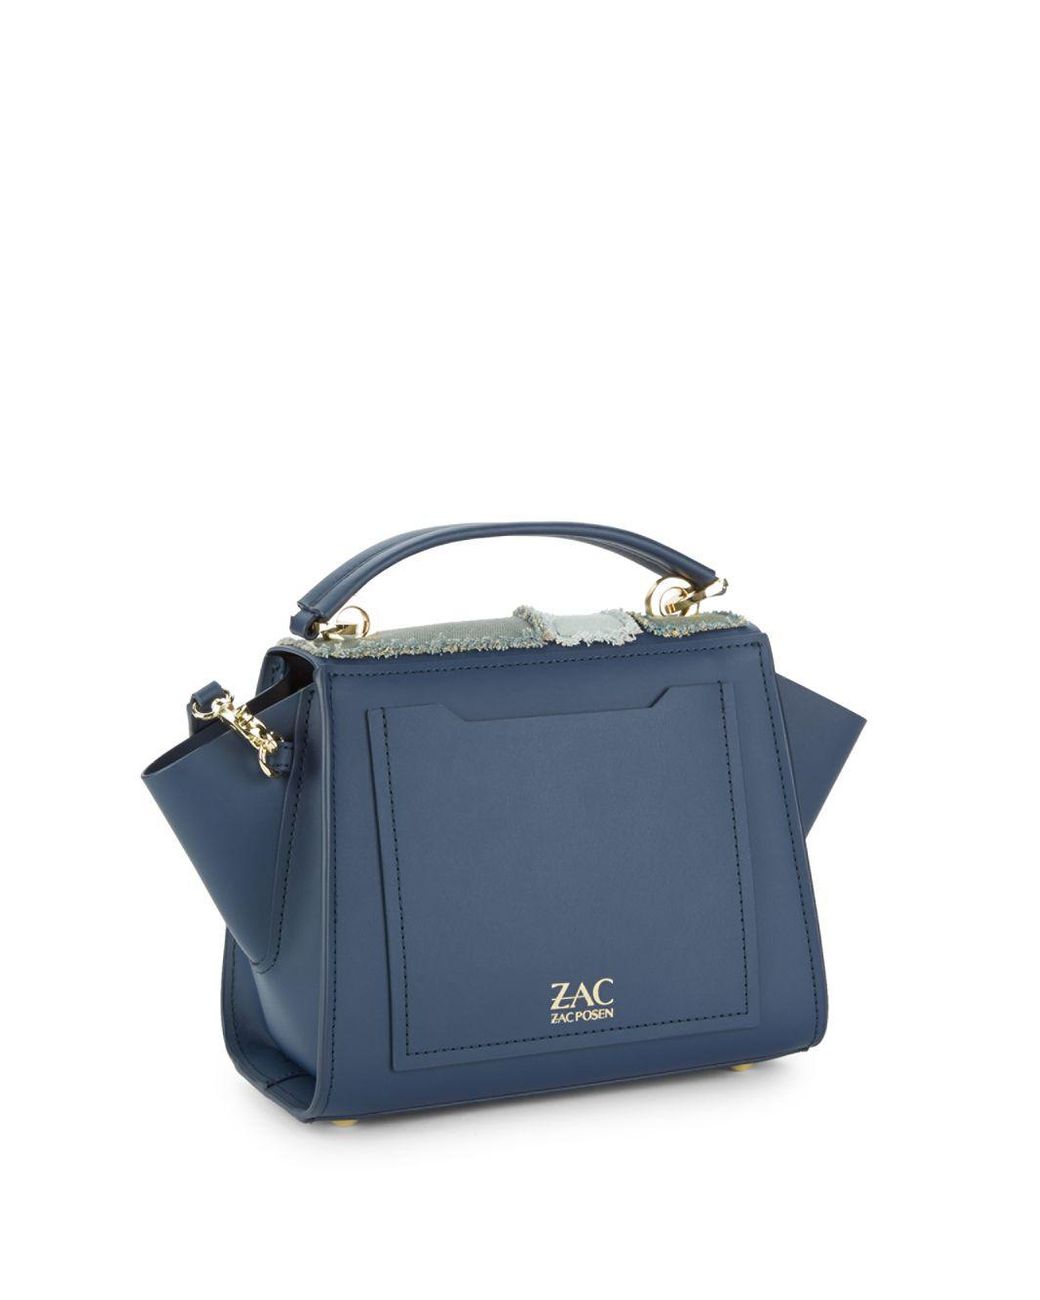 Blue Floral Eartha Iconic Bag by ZAC Zac Posen Handbags for $99